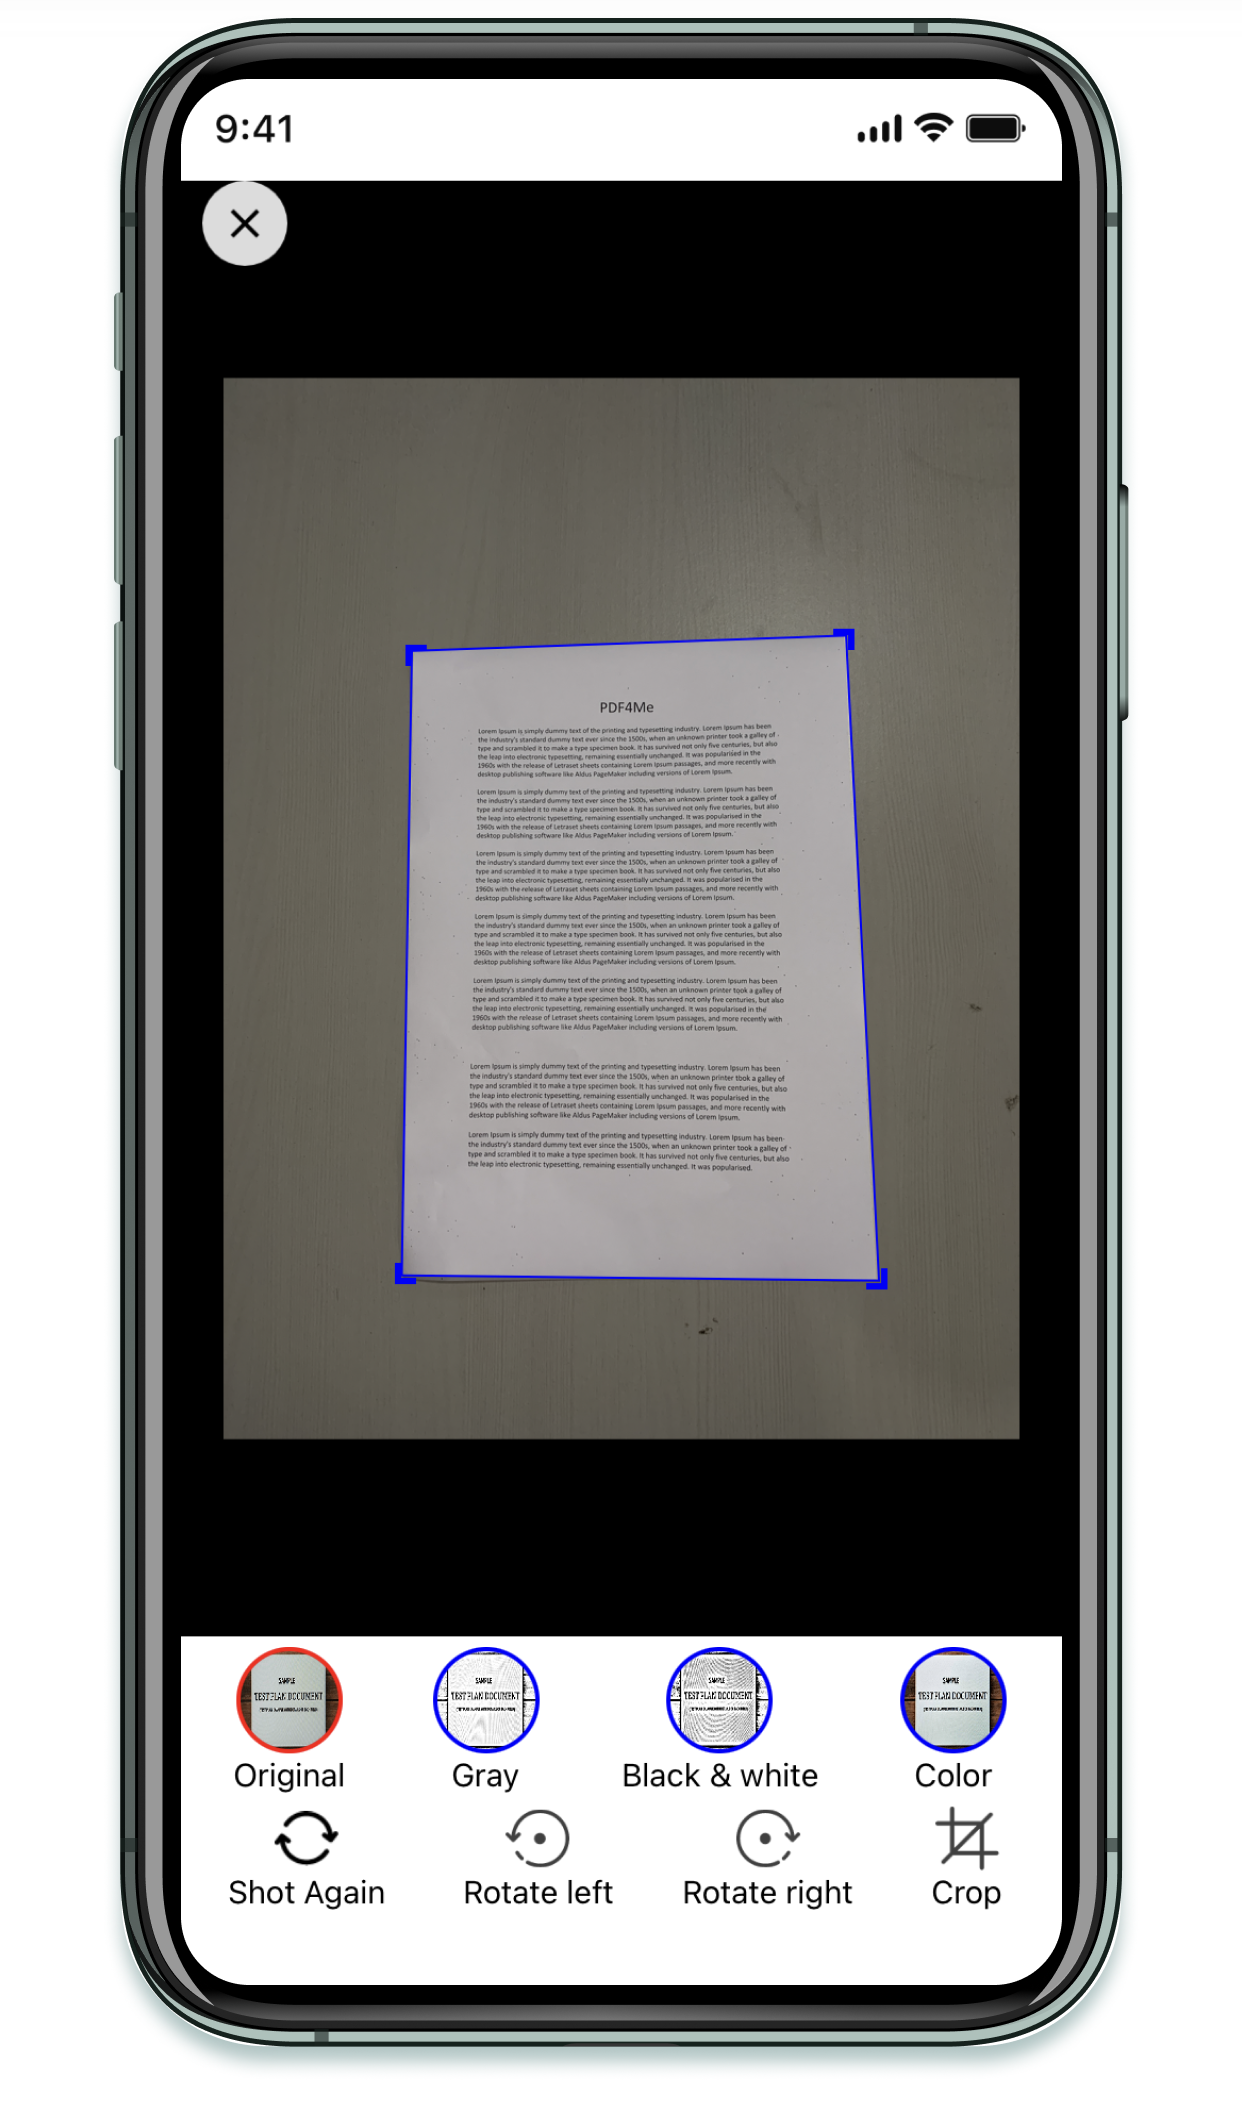 Applicazione PDF4me Scan & Automation per iOS